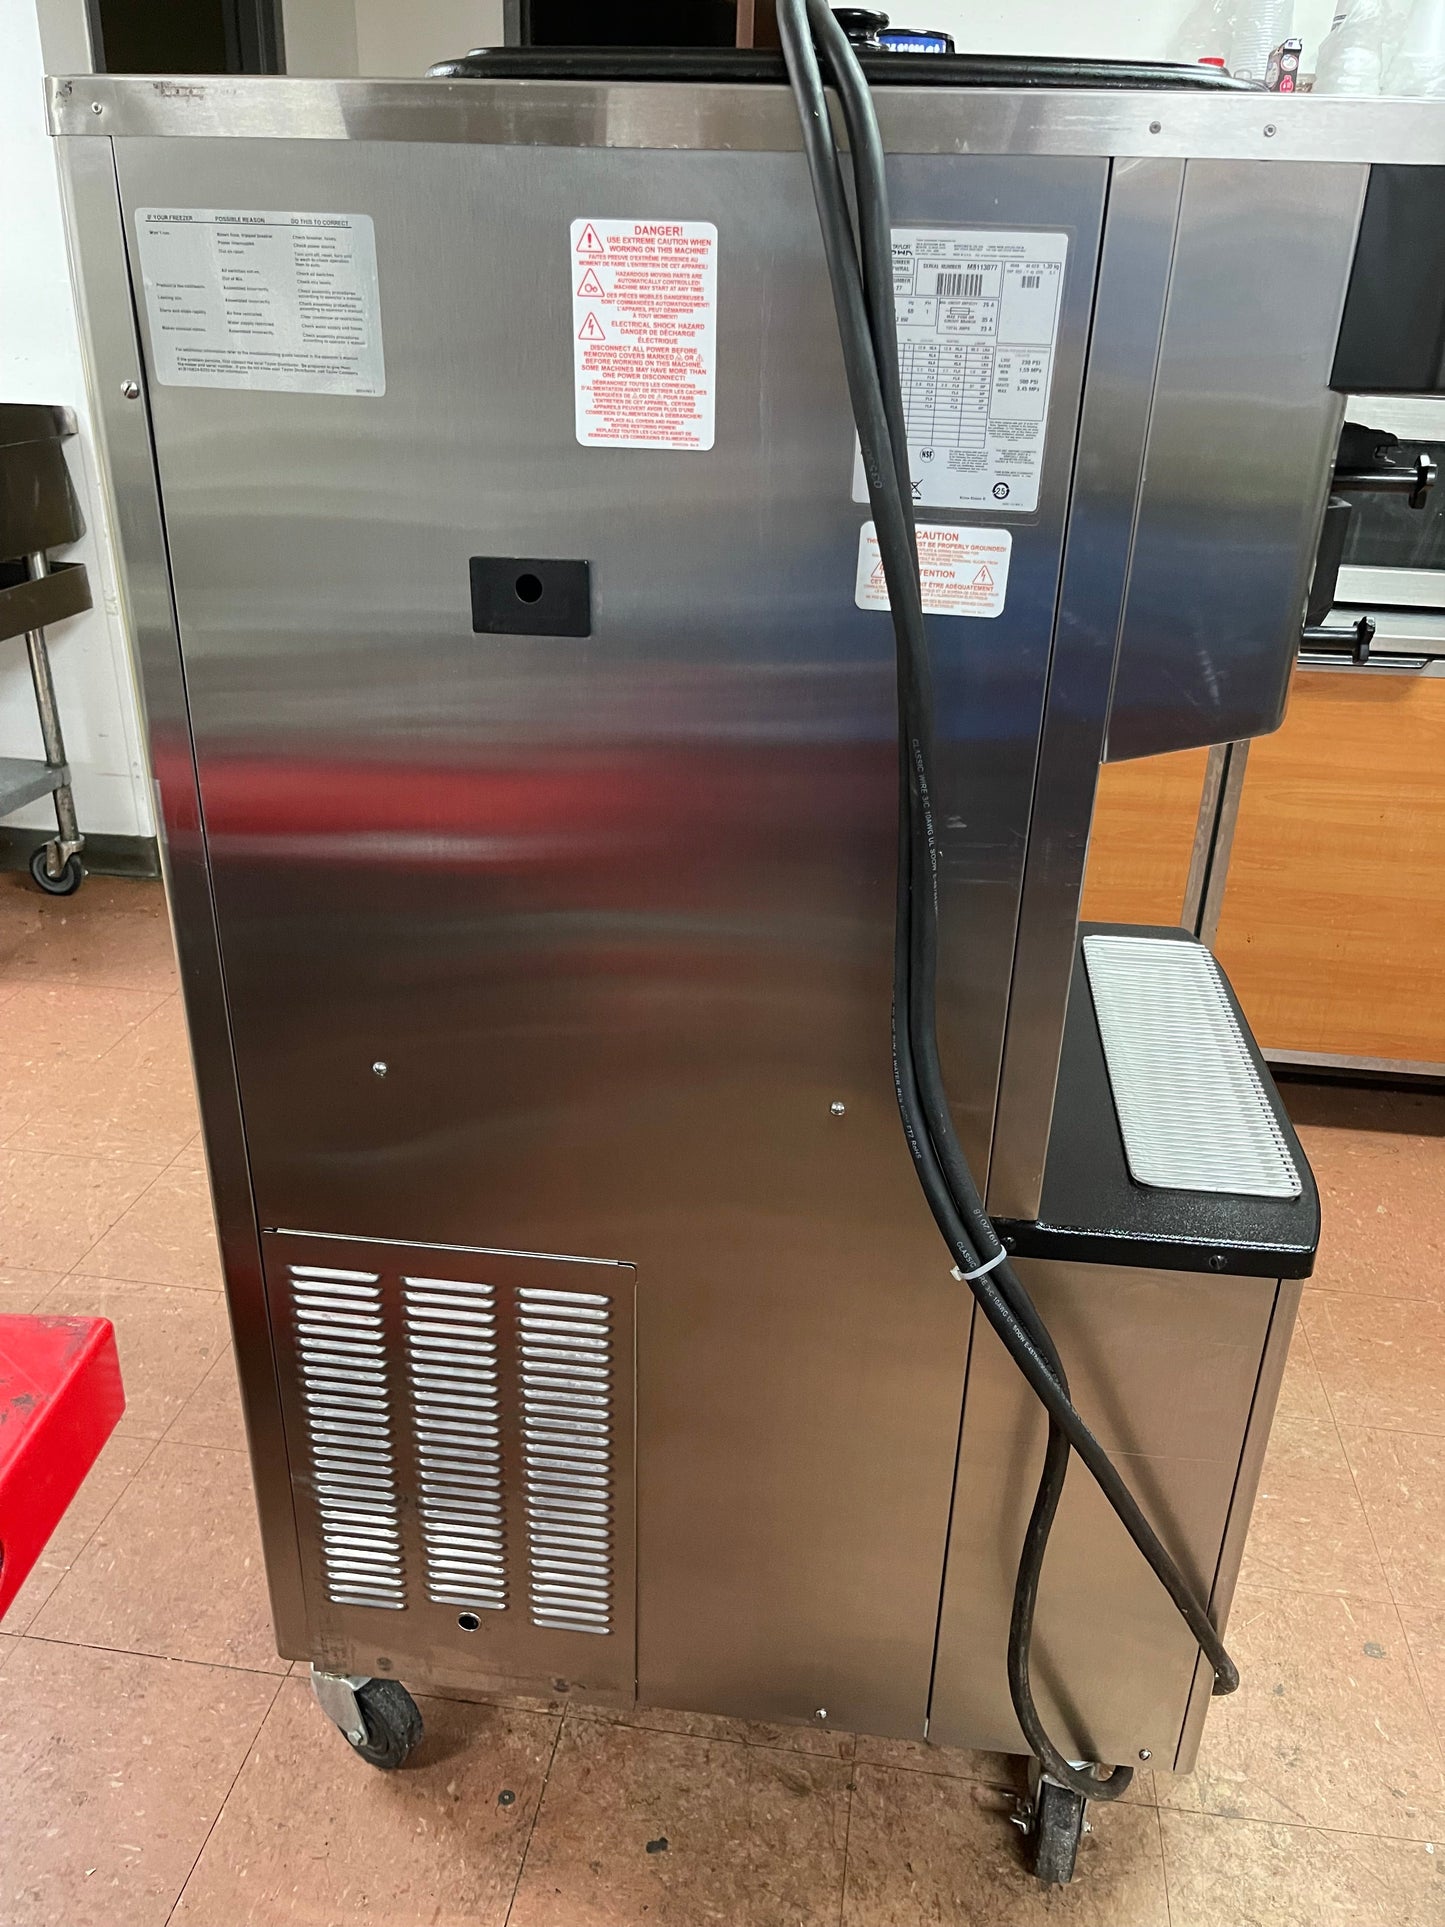 2018 Taylor C717-27 Soft Serve Freezer Twist Air Cooled Ice Cream Machine 1-Phase M8052638 - JS